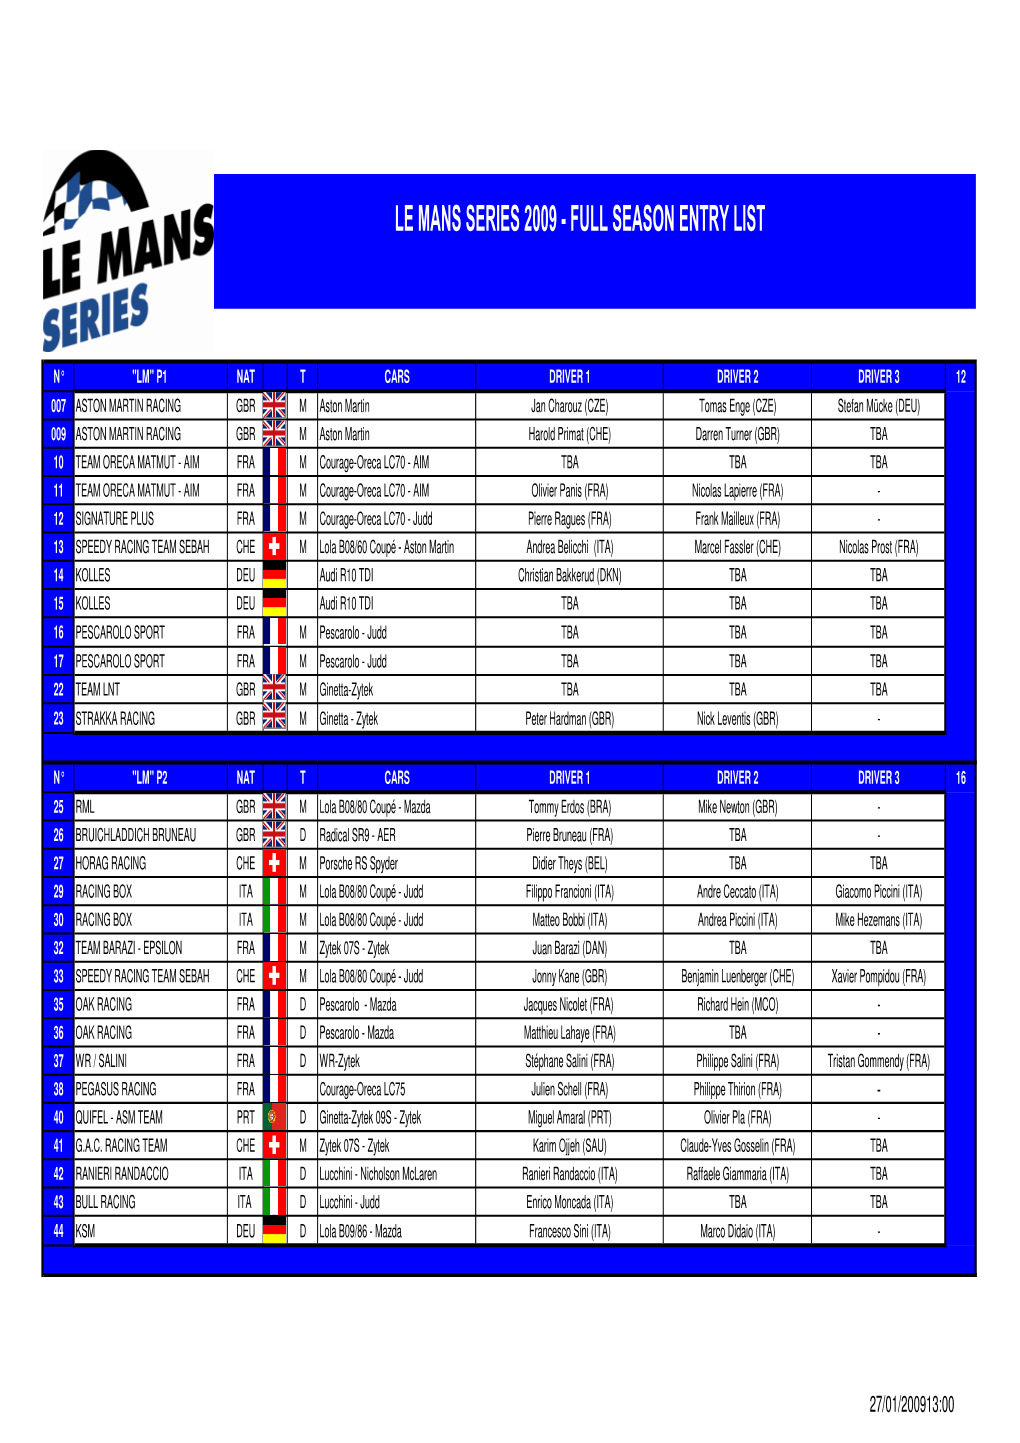 Le Mans Series 2009 Full Season Entry List